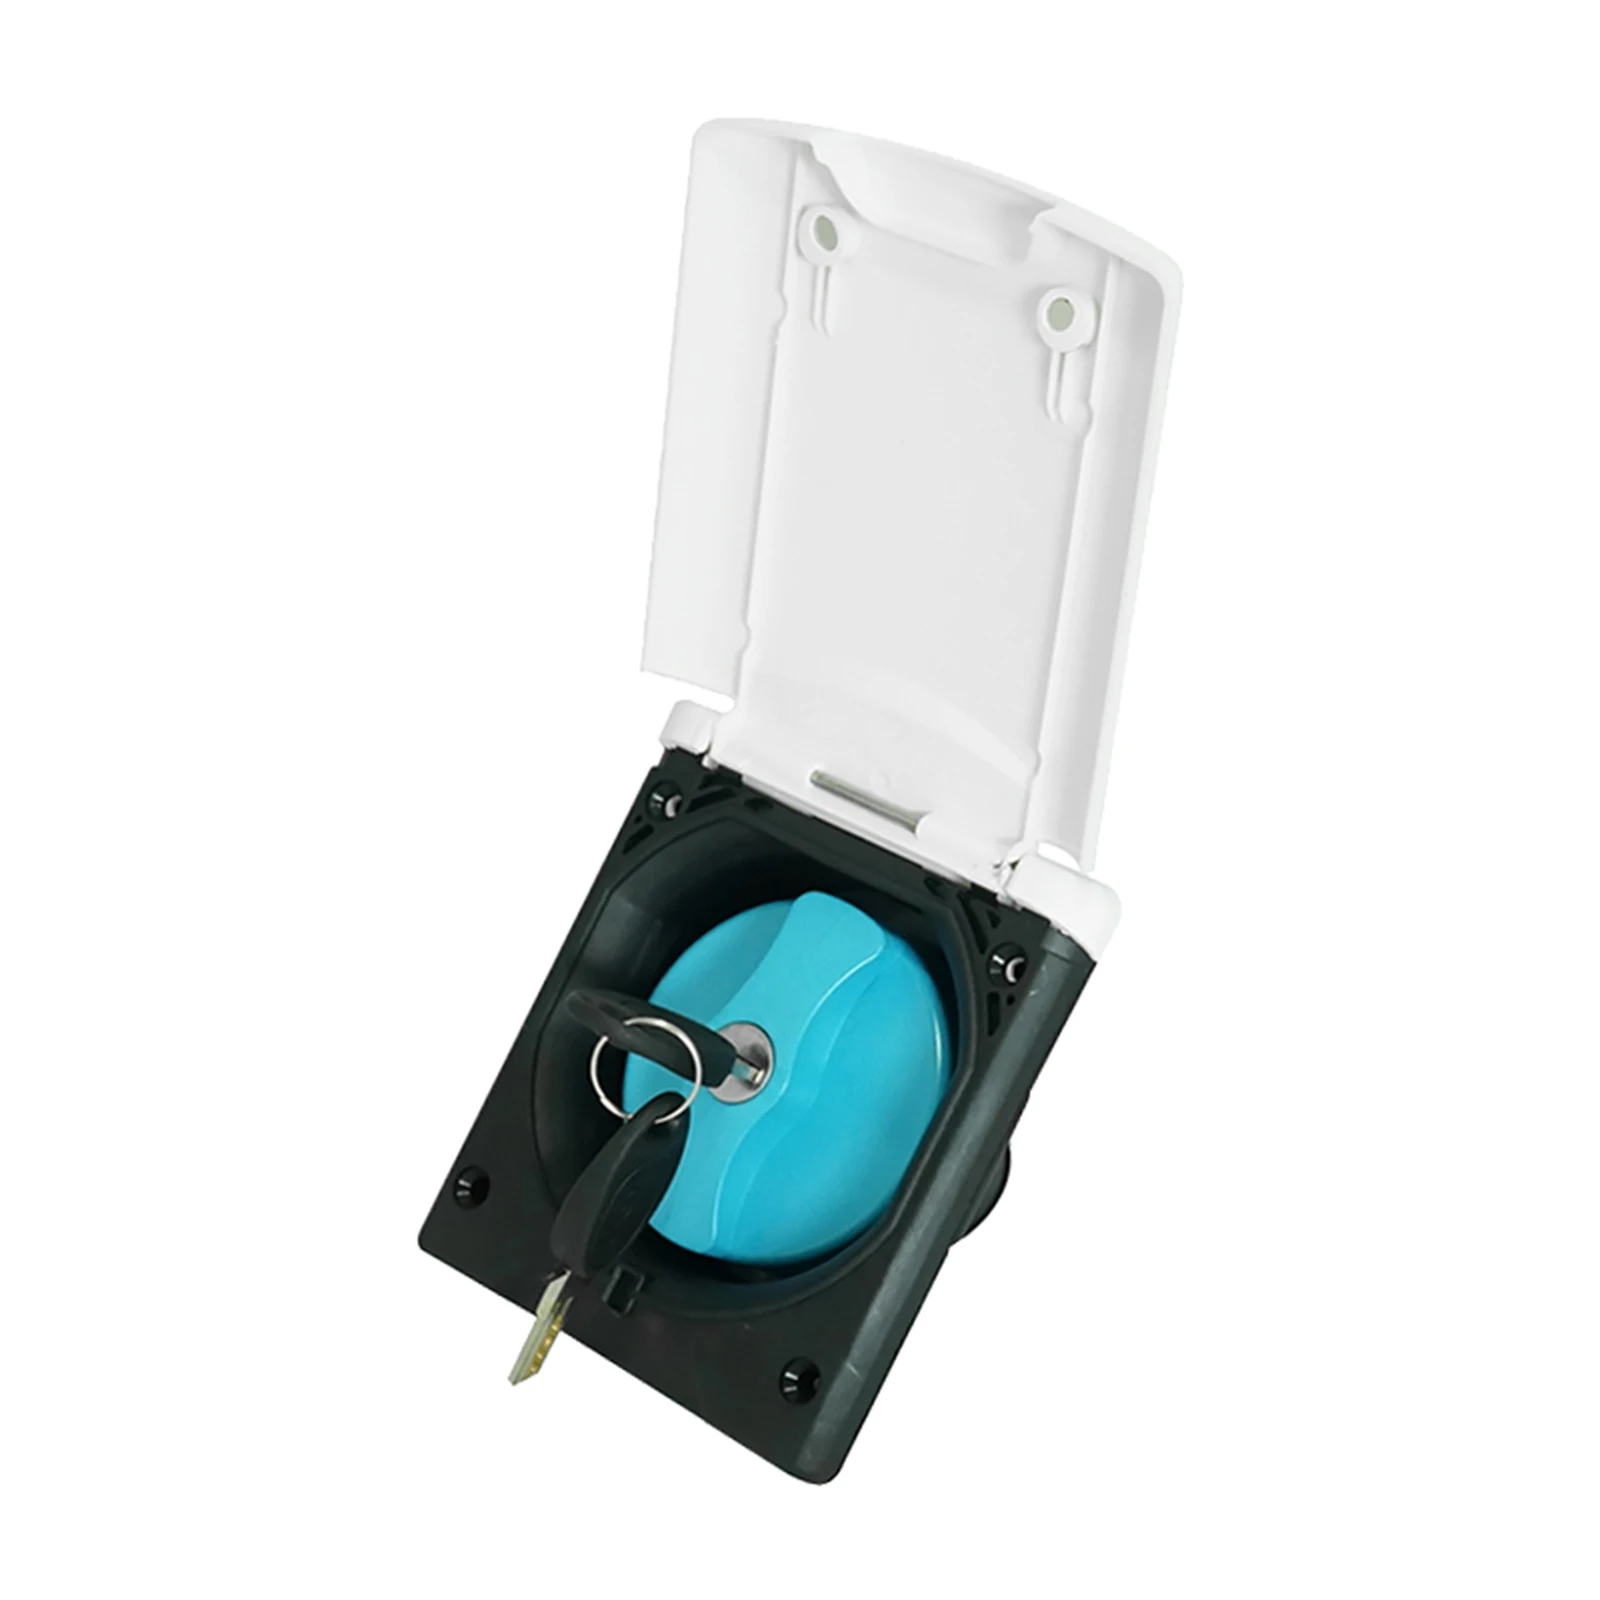 

Yacht RV Camper Retrofit Locking Gravity Water Inlet Lock w/ Keys, Easy to Install